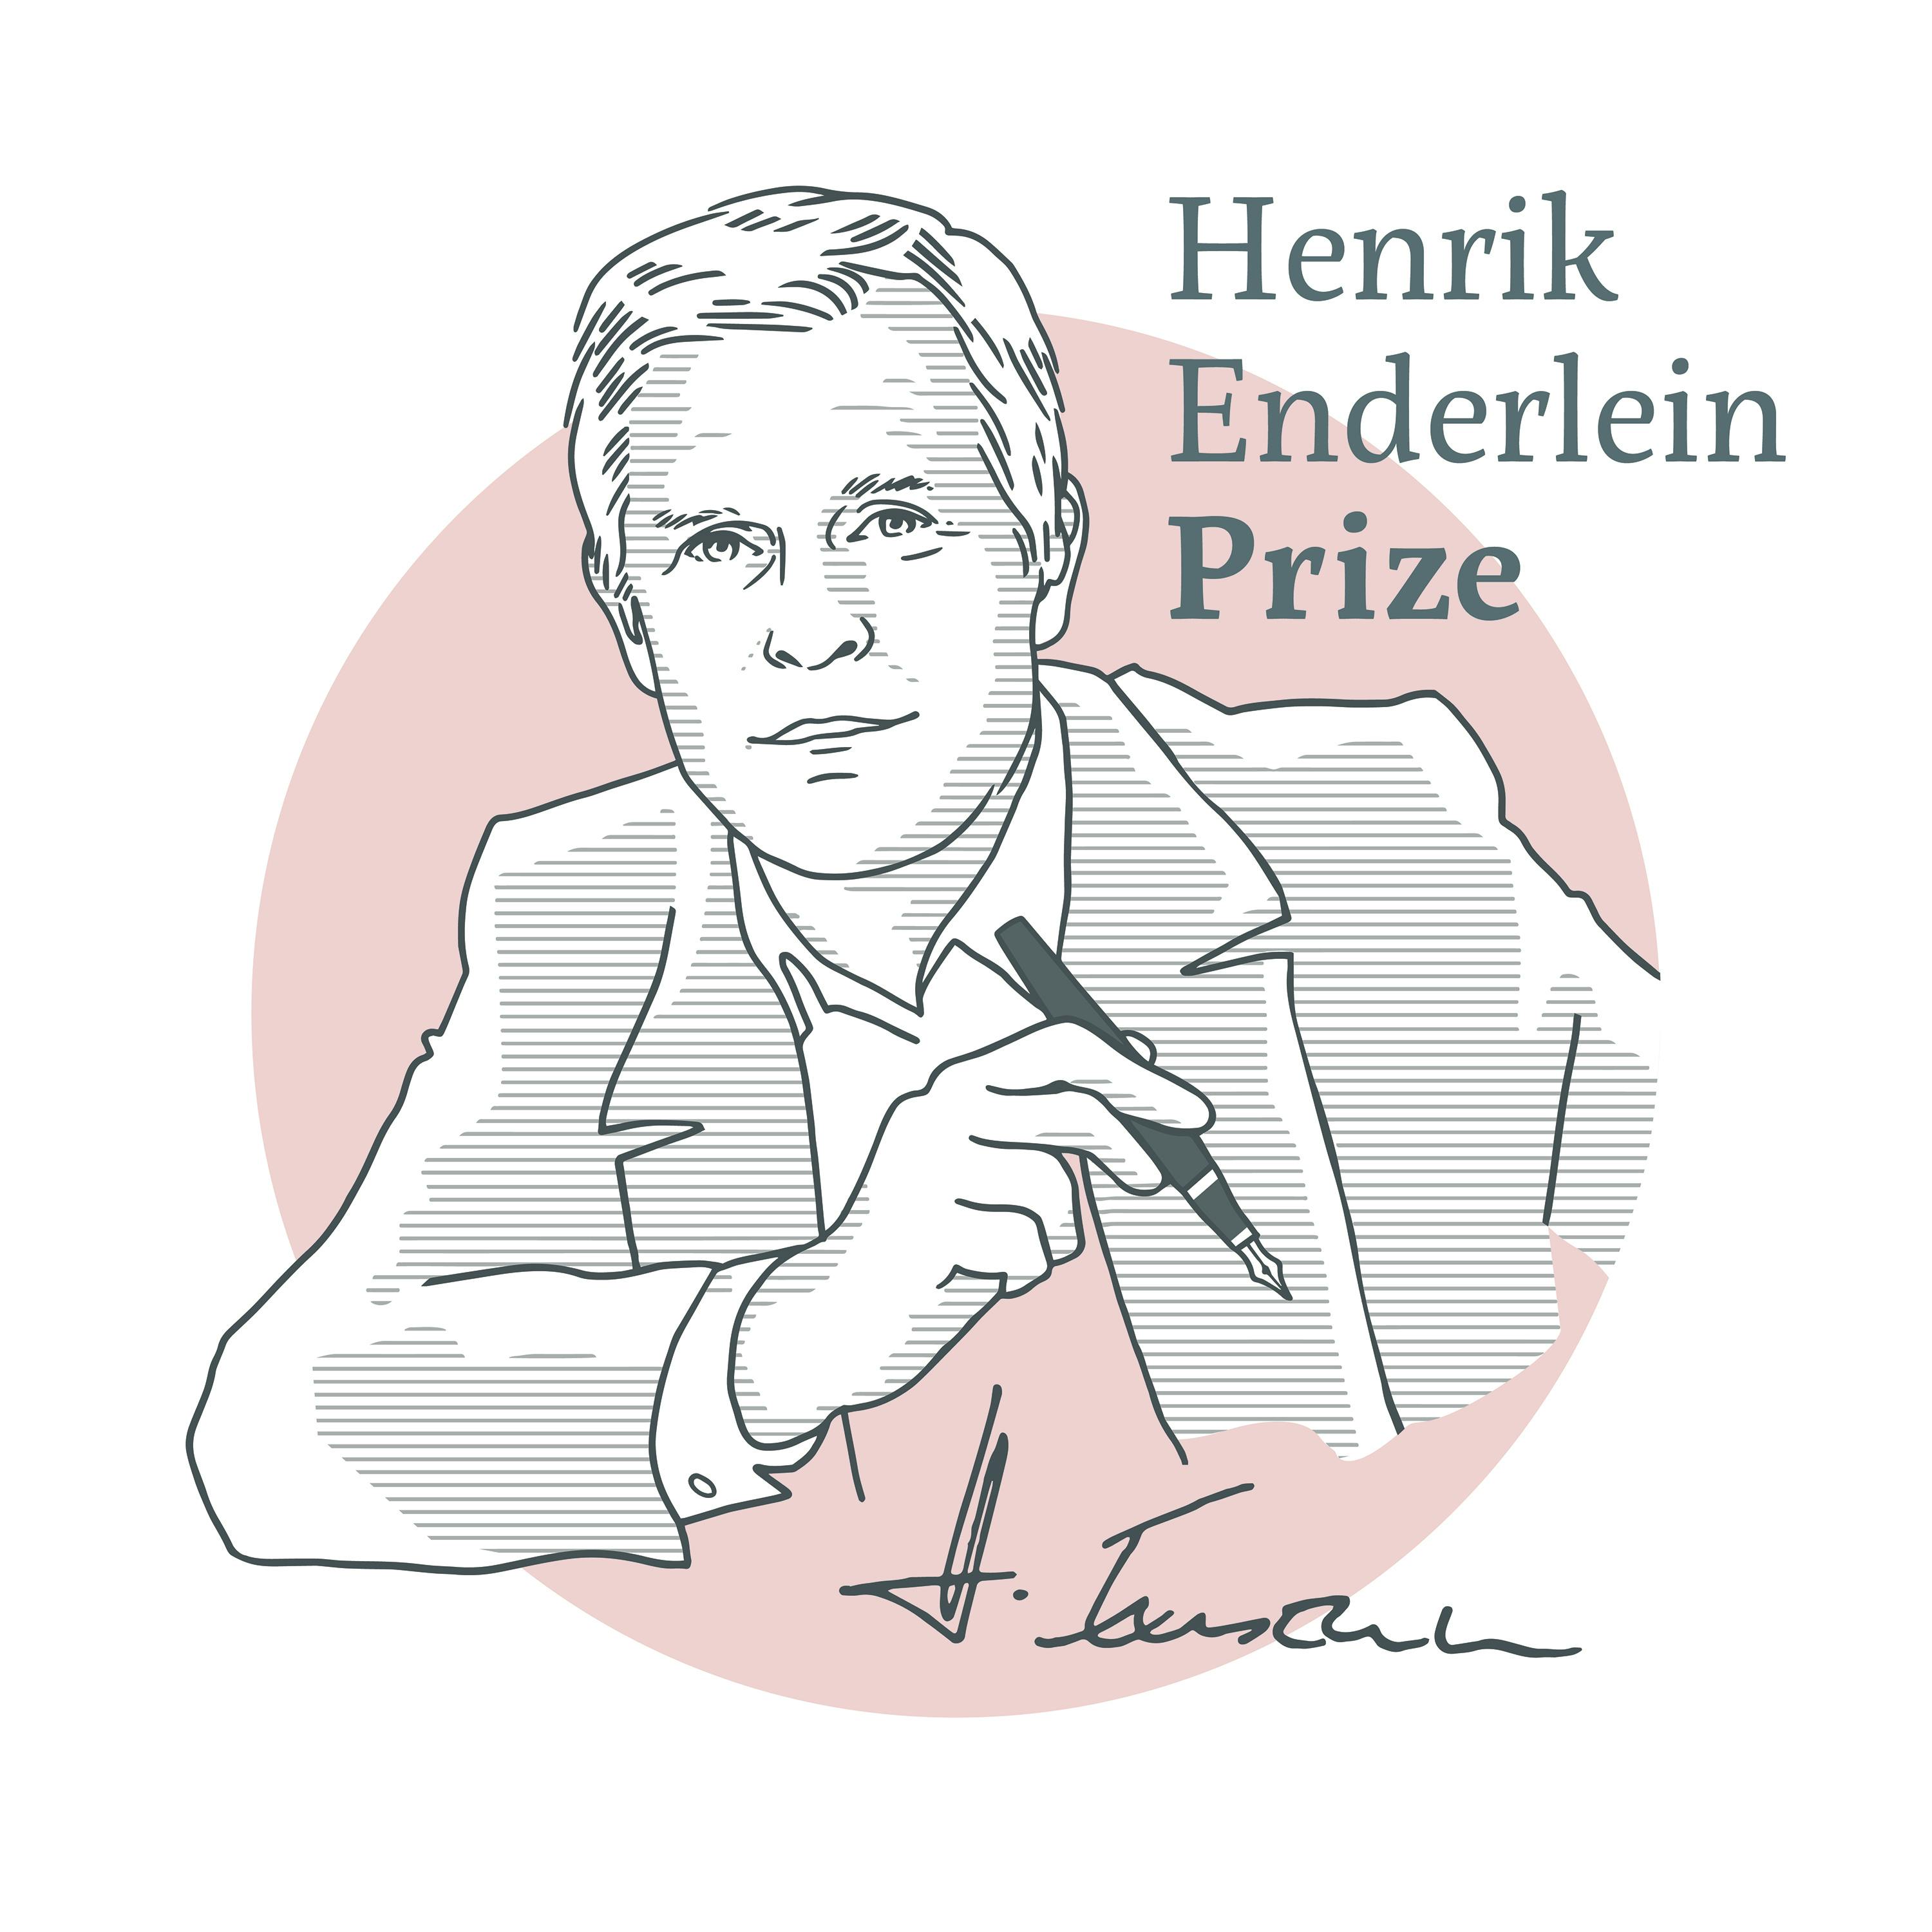 Henrik Enderlein Prize